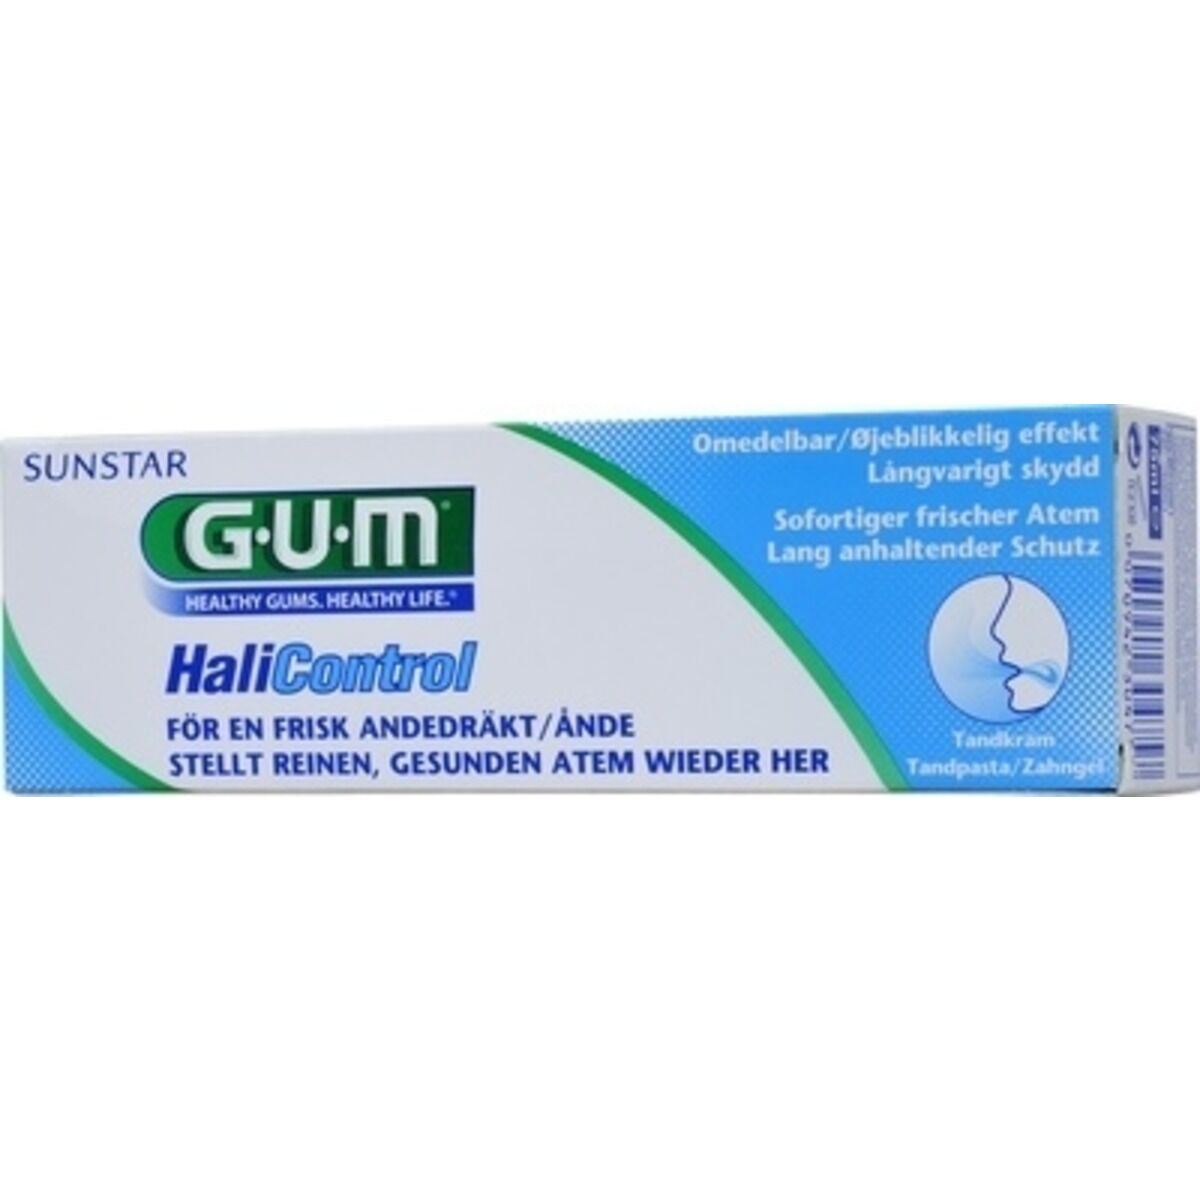 Sunstar GUM Gum Halicontrol Tannkrem - 75 ml